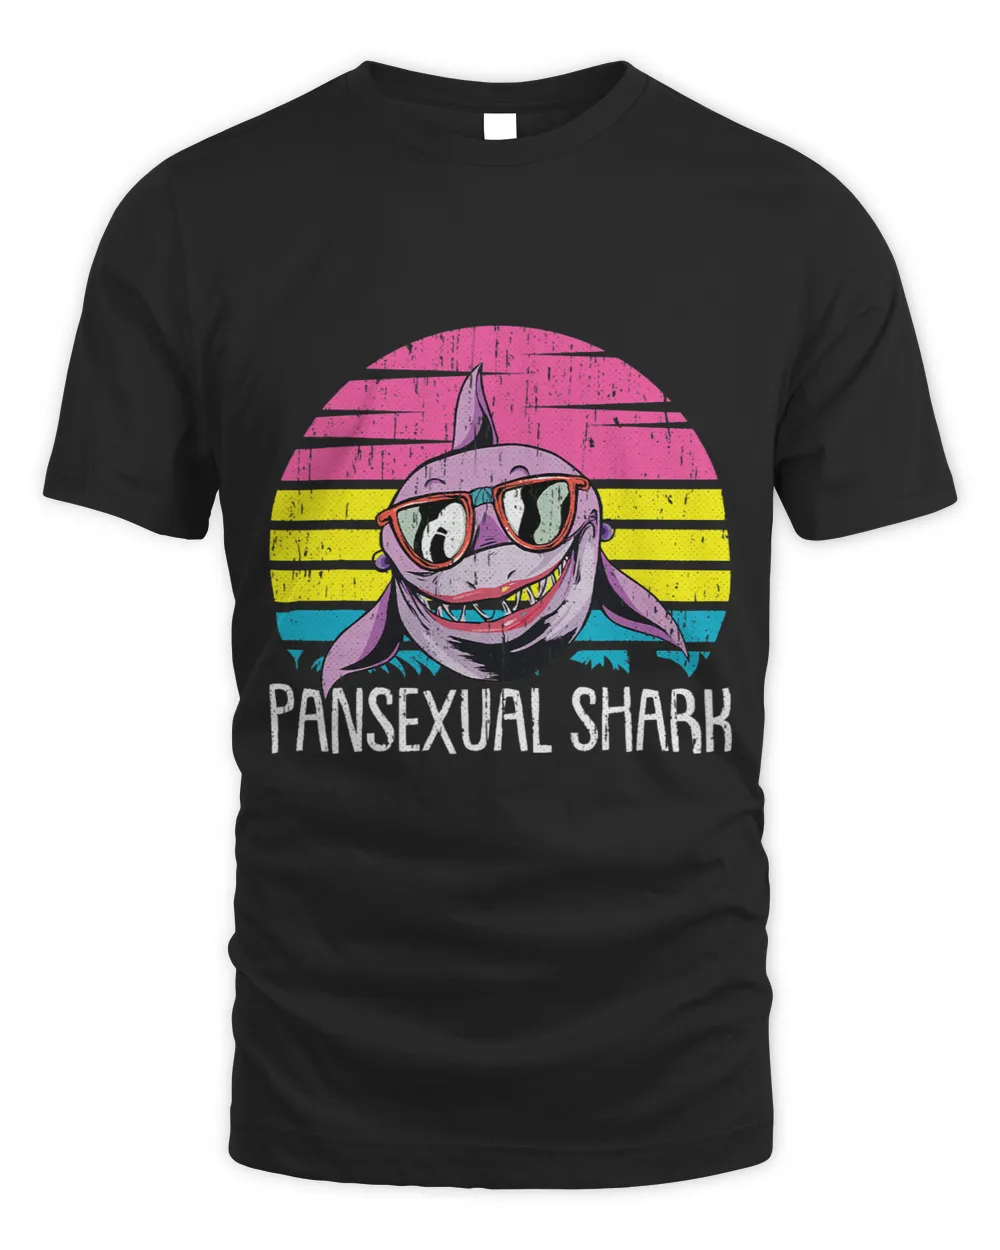 Shark Pan sexual Pride Retro Ocean Animal LGBT Q Ally